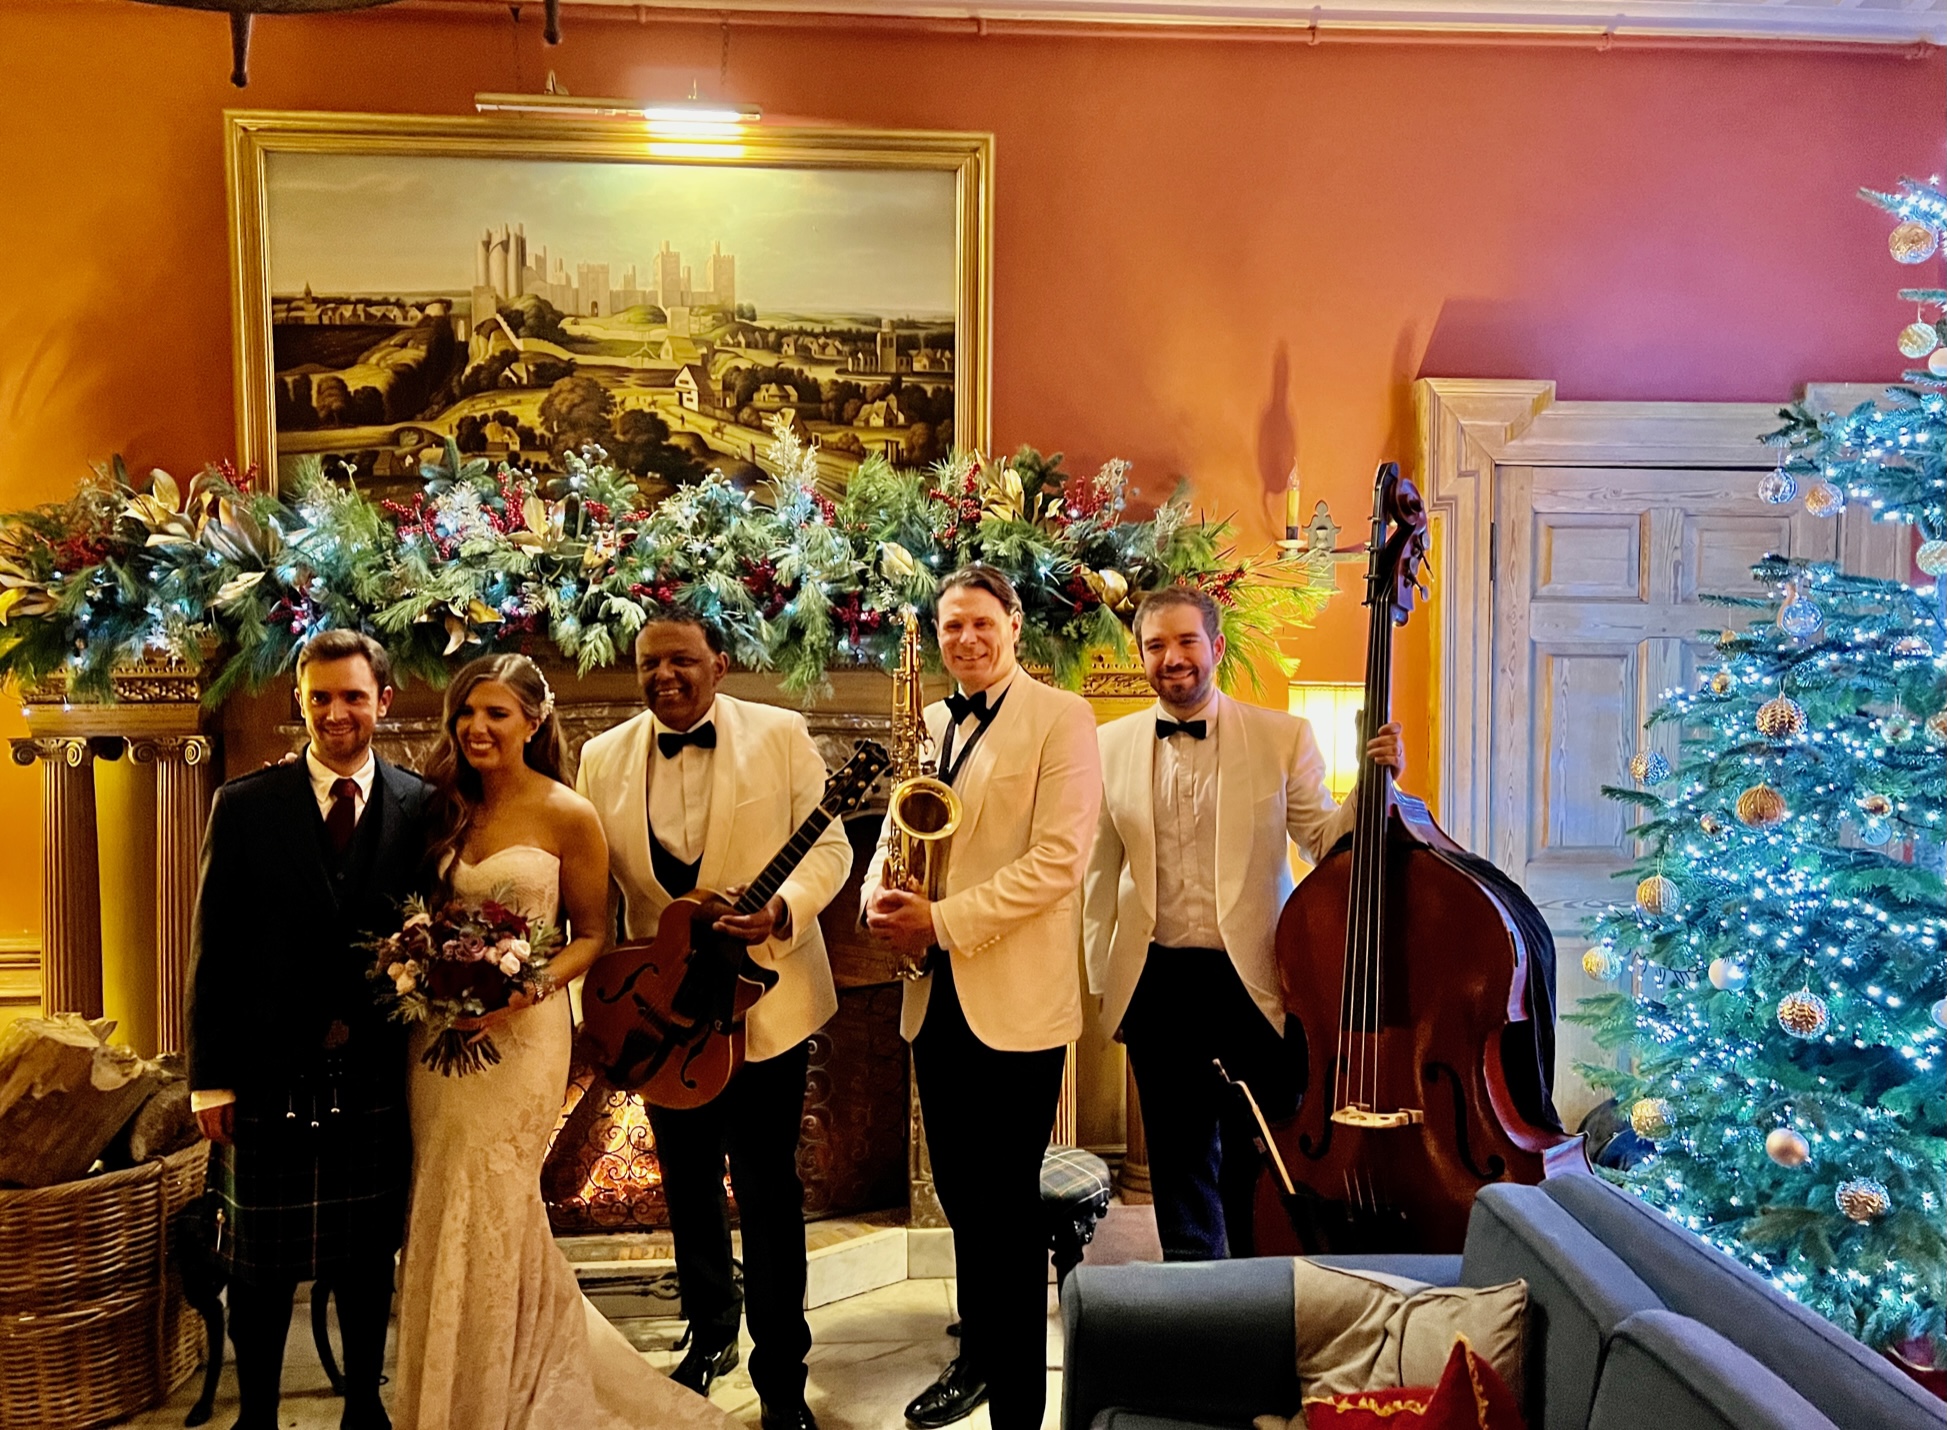 Gilmerton House Christmas wedding with the Ritz Trio